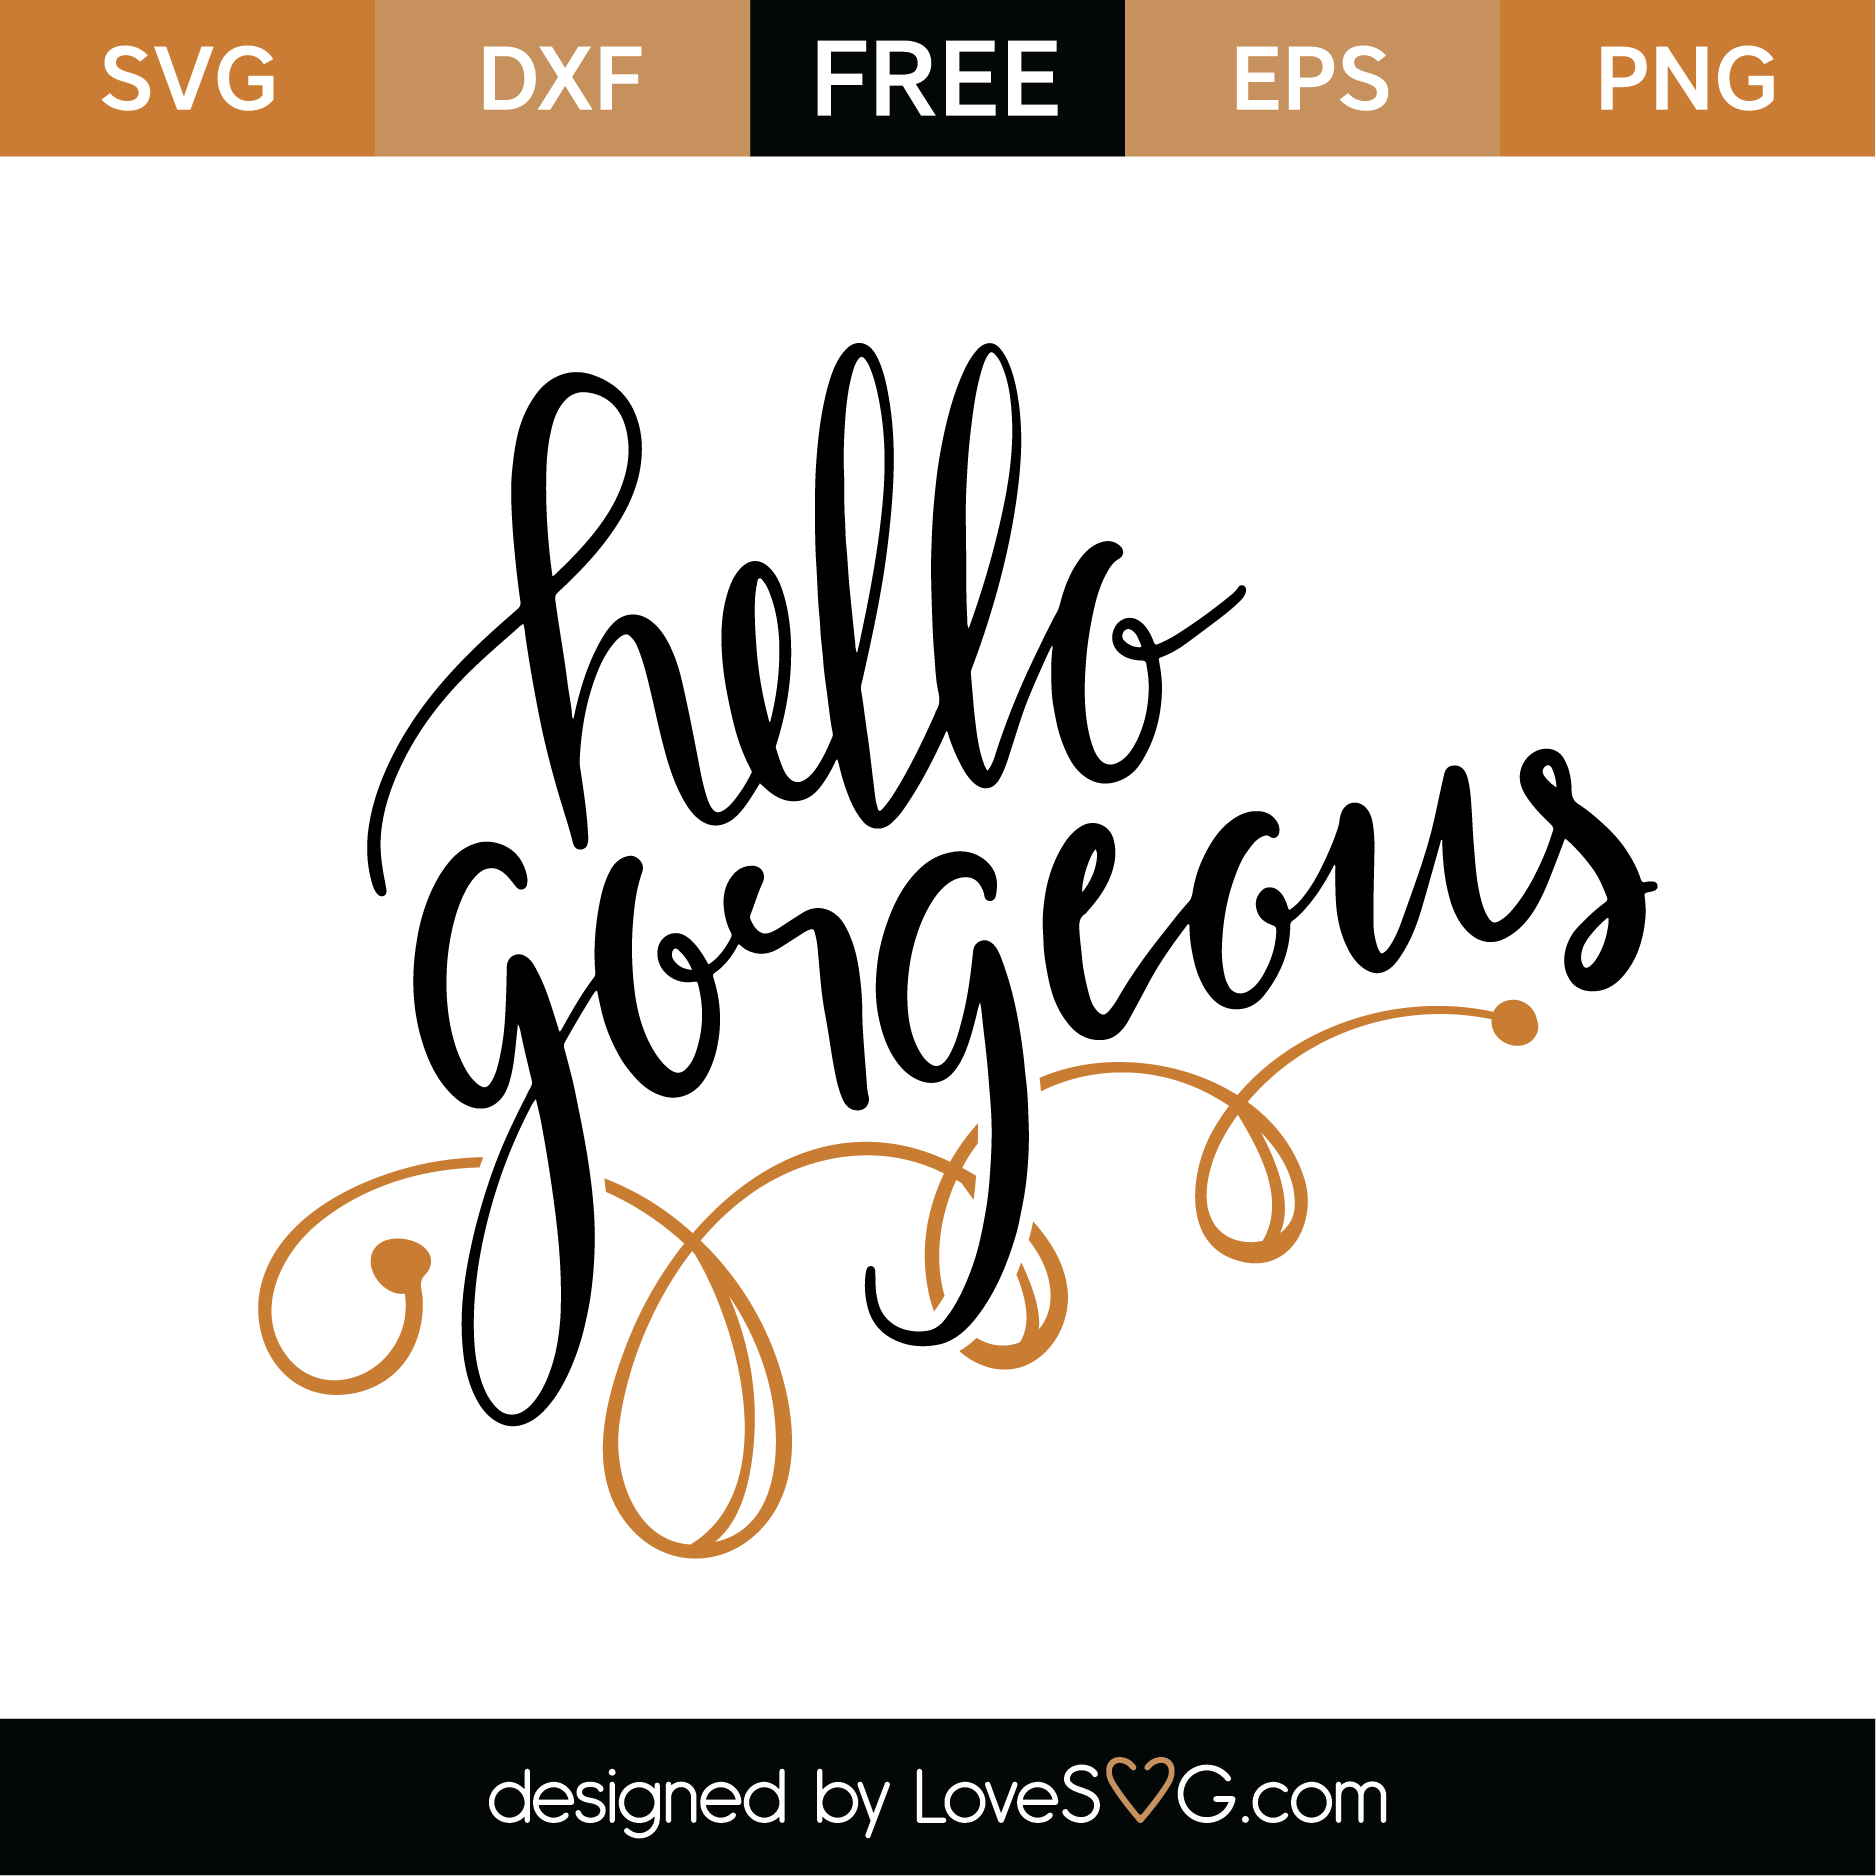 Download Free Hello Gorgeous SVG Cut File | Lovesvg.com